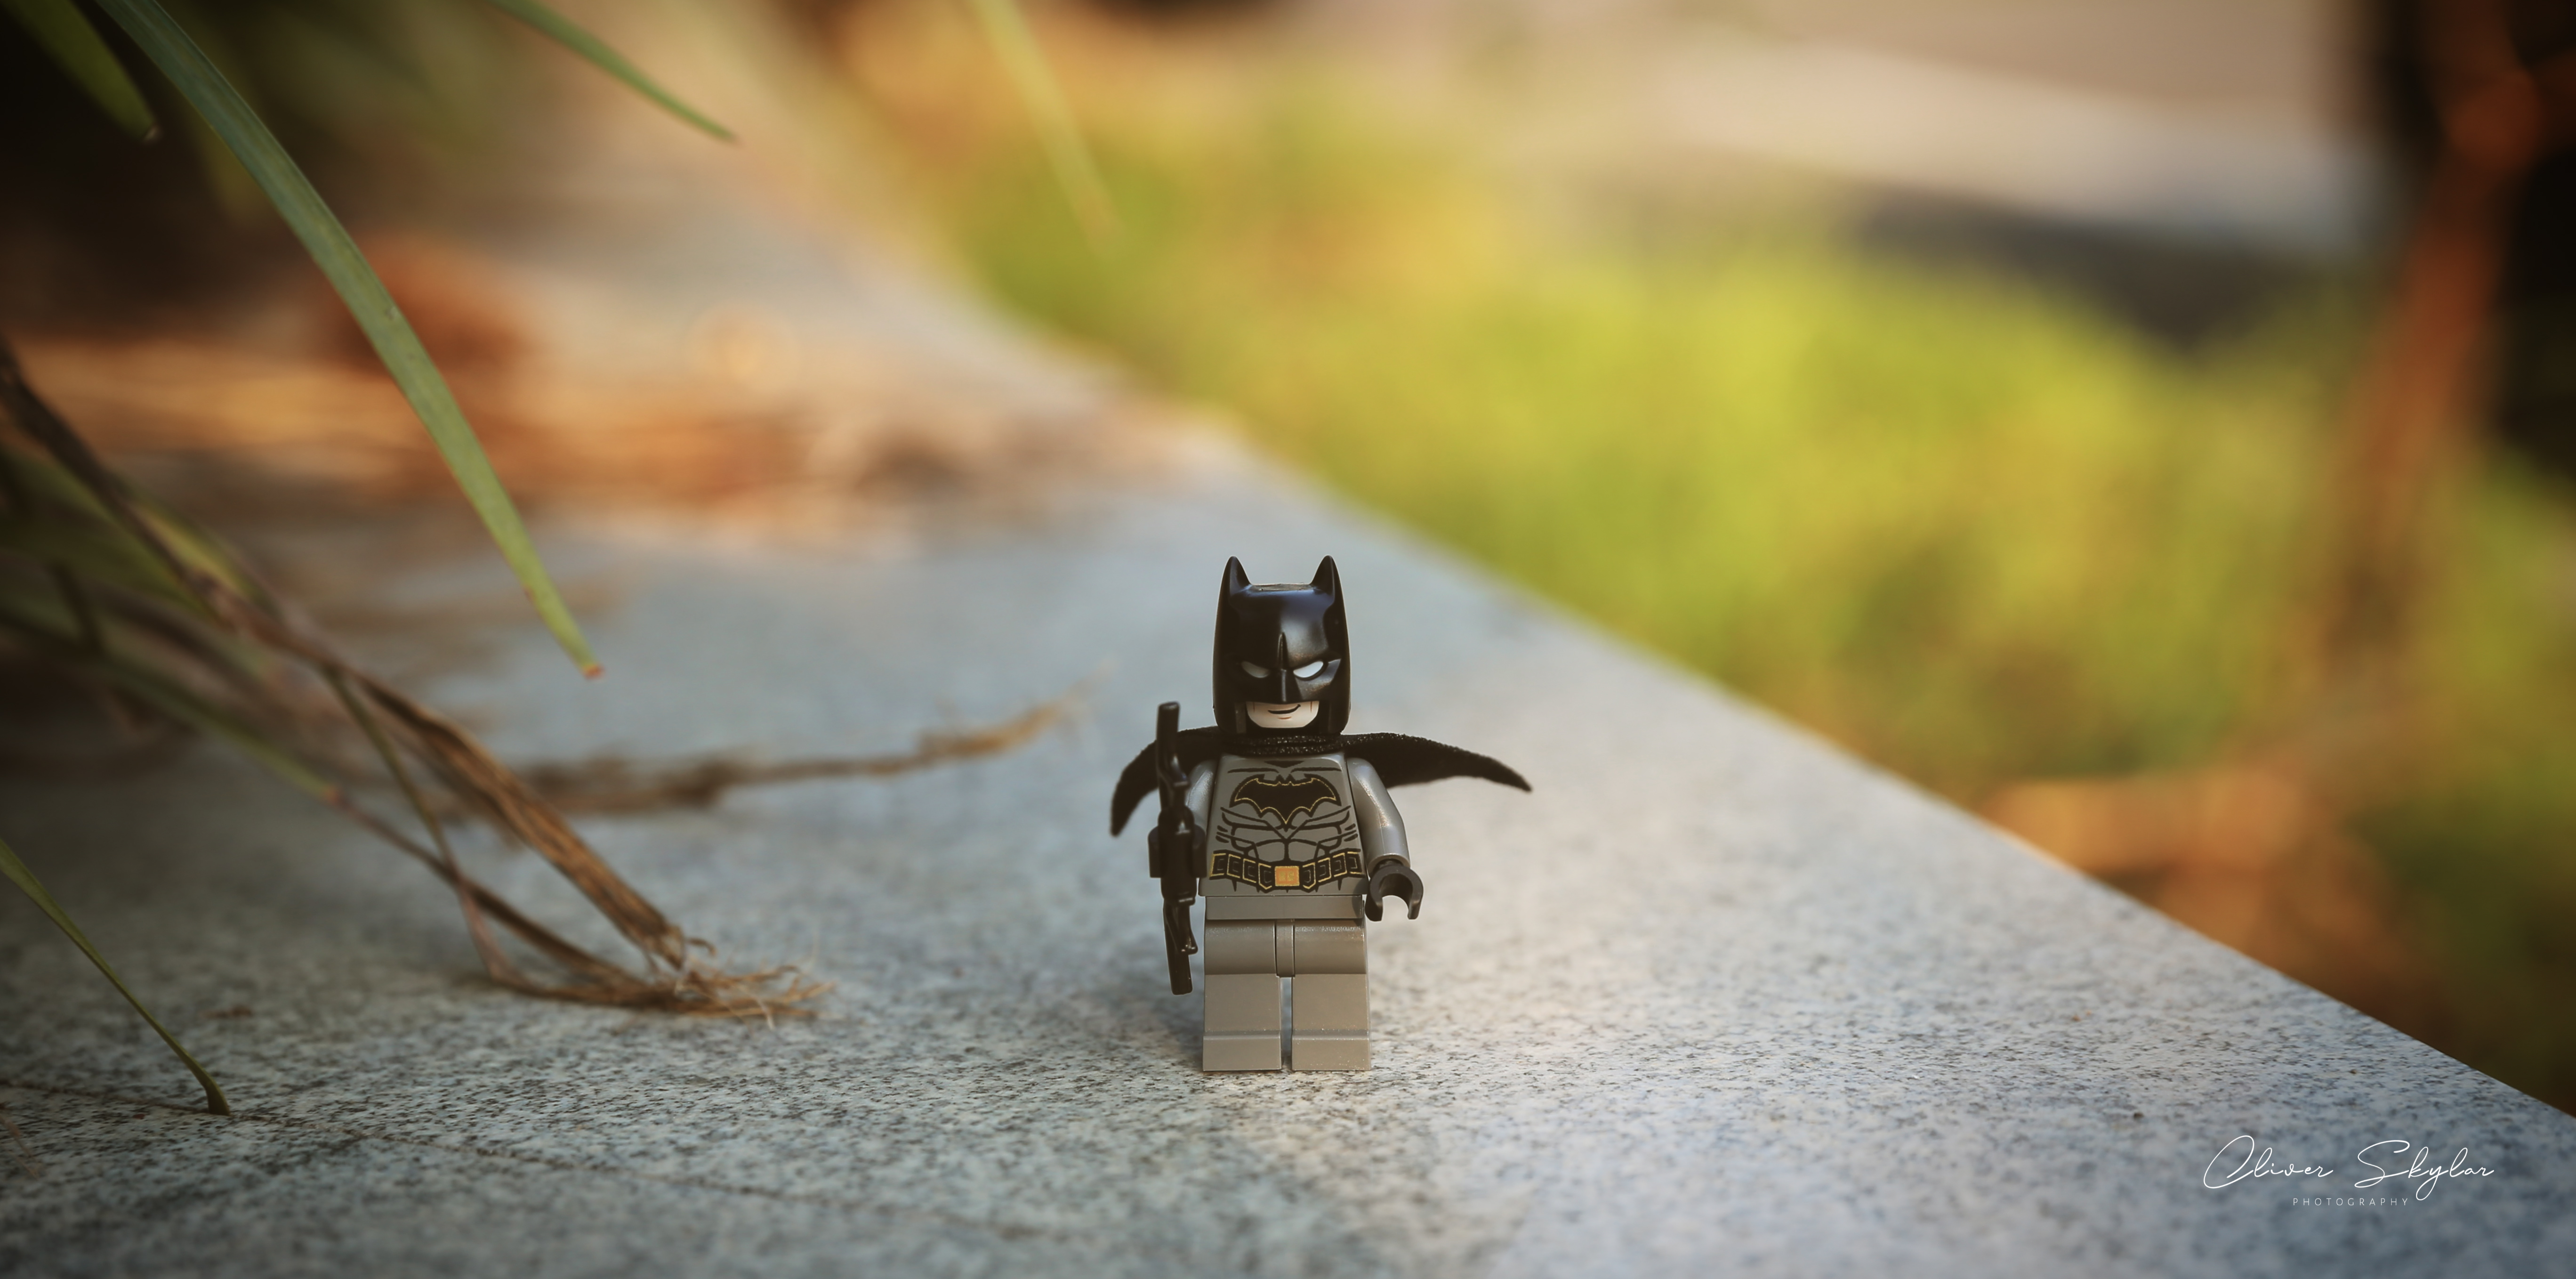 General 5472x2716 LEGO Batman toys superhero